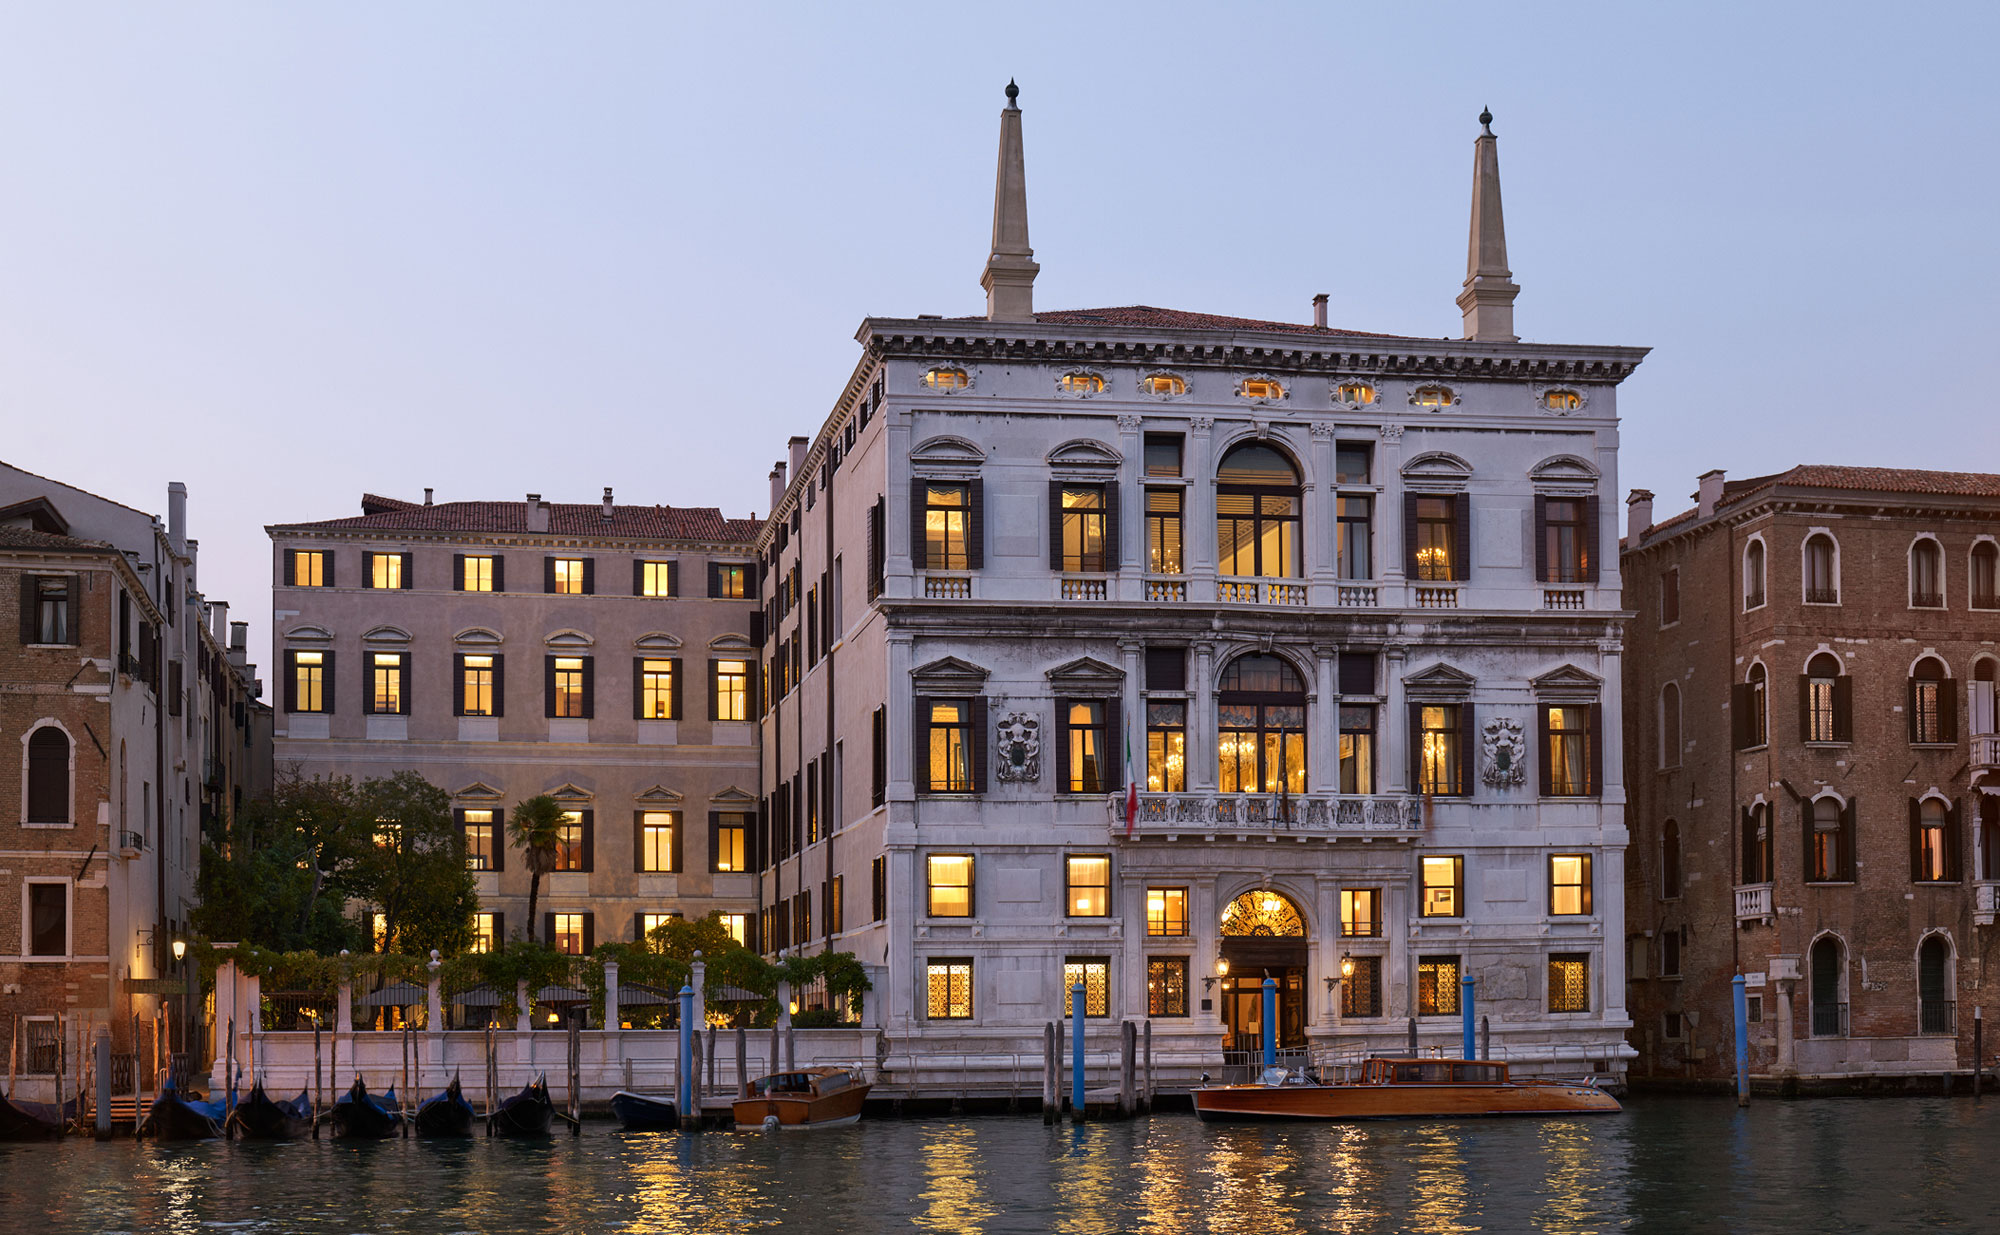 Luxury Hotel On The Grand Canal, Venice - Aman Venice